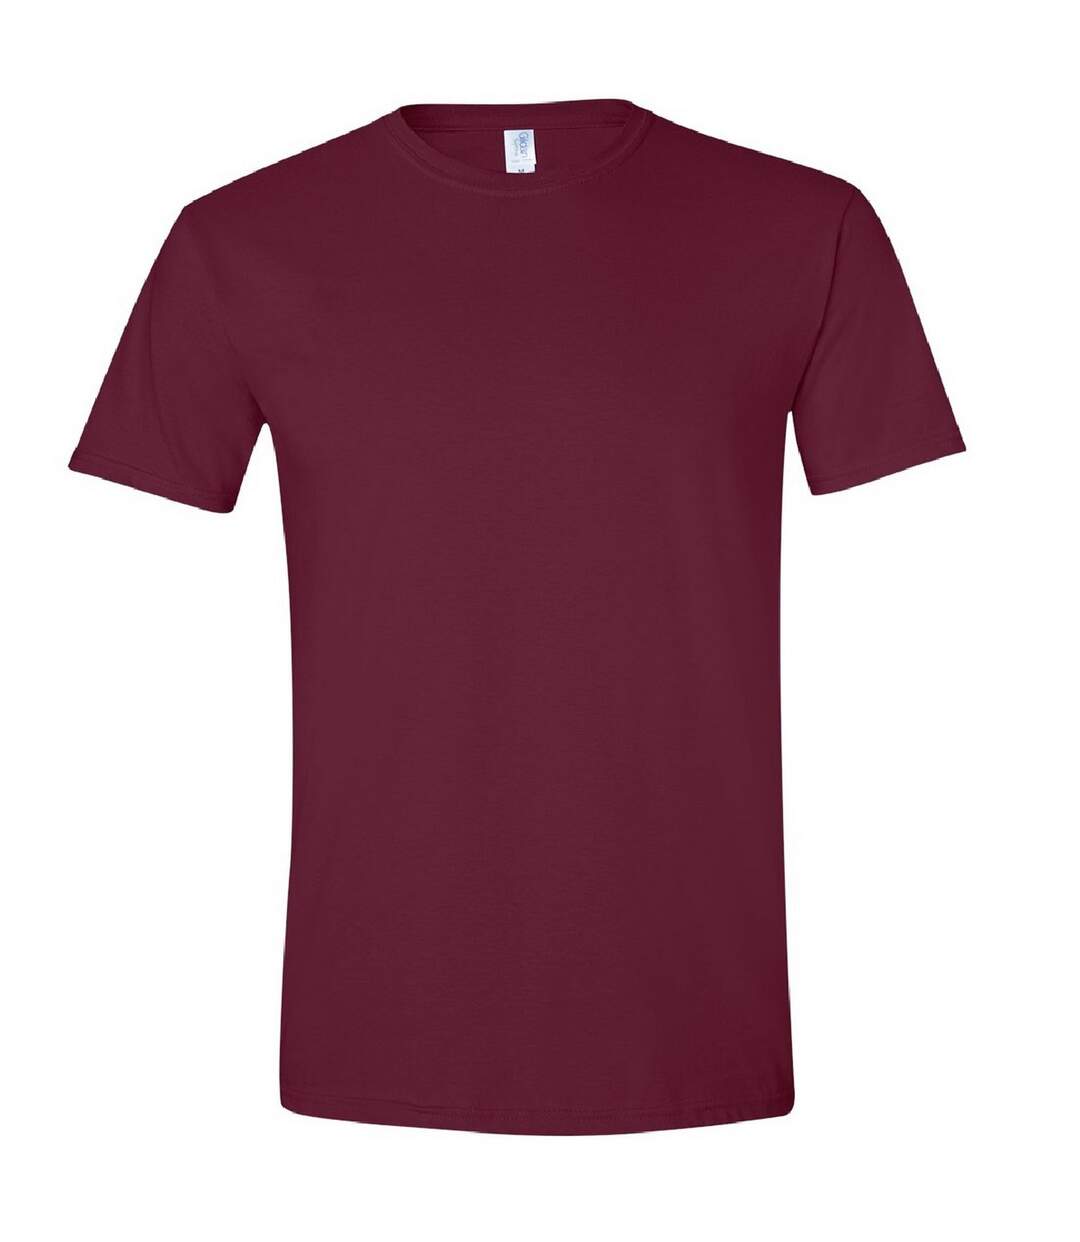 Gildan Mens Short Sleeve Soft-Style T-Shirt (Maroon)